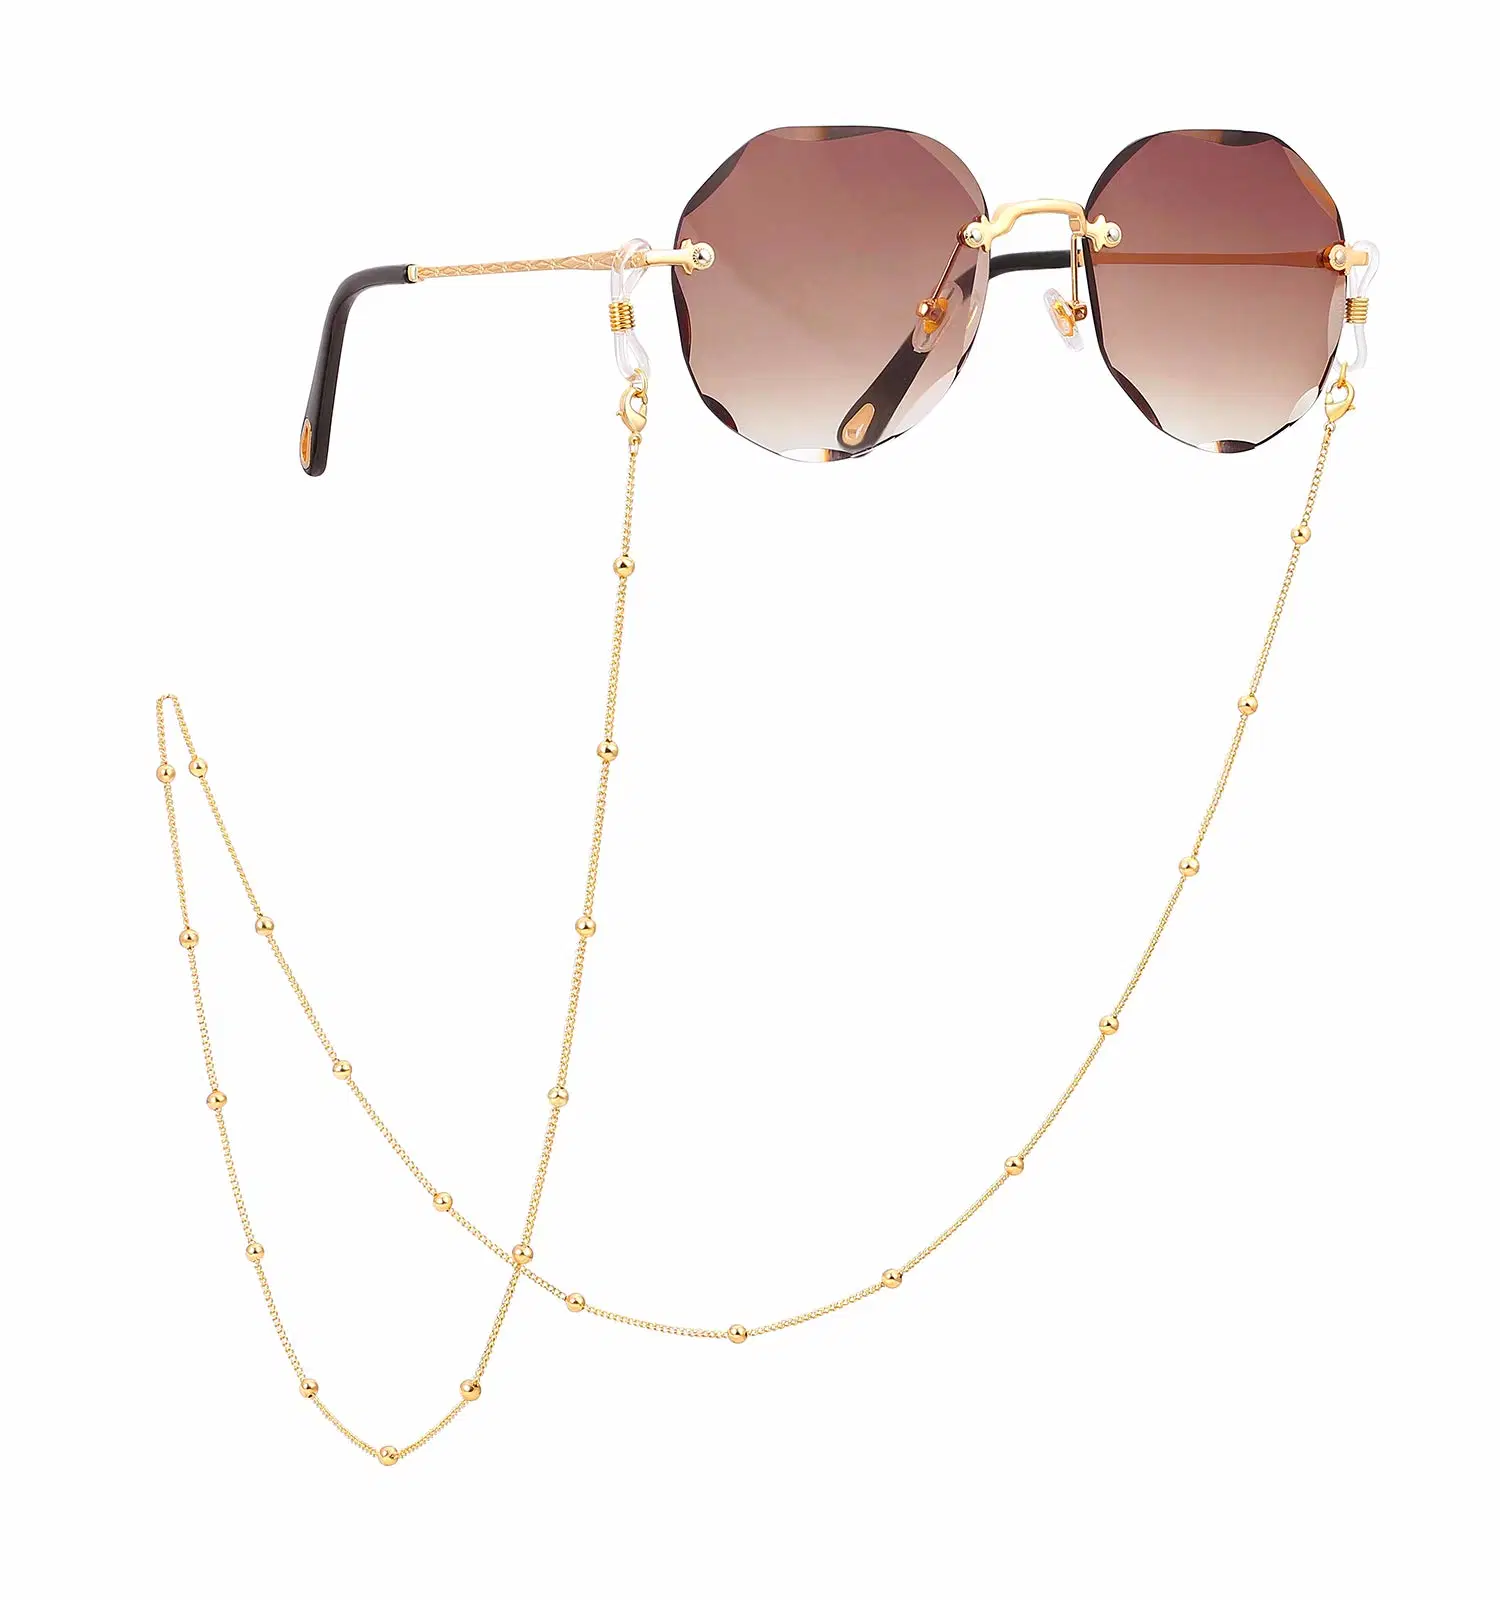 Hot Sellers Eyewear Wearing Comfortable Stainless Steel Eyeglasses Sunglasses Chains 18K Gold Plated Eyeglass Holder Chain